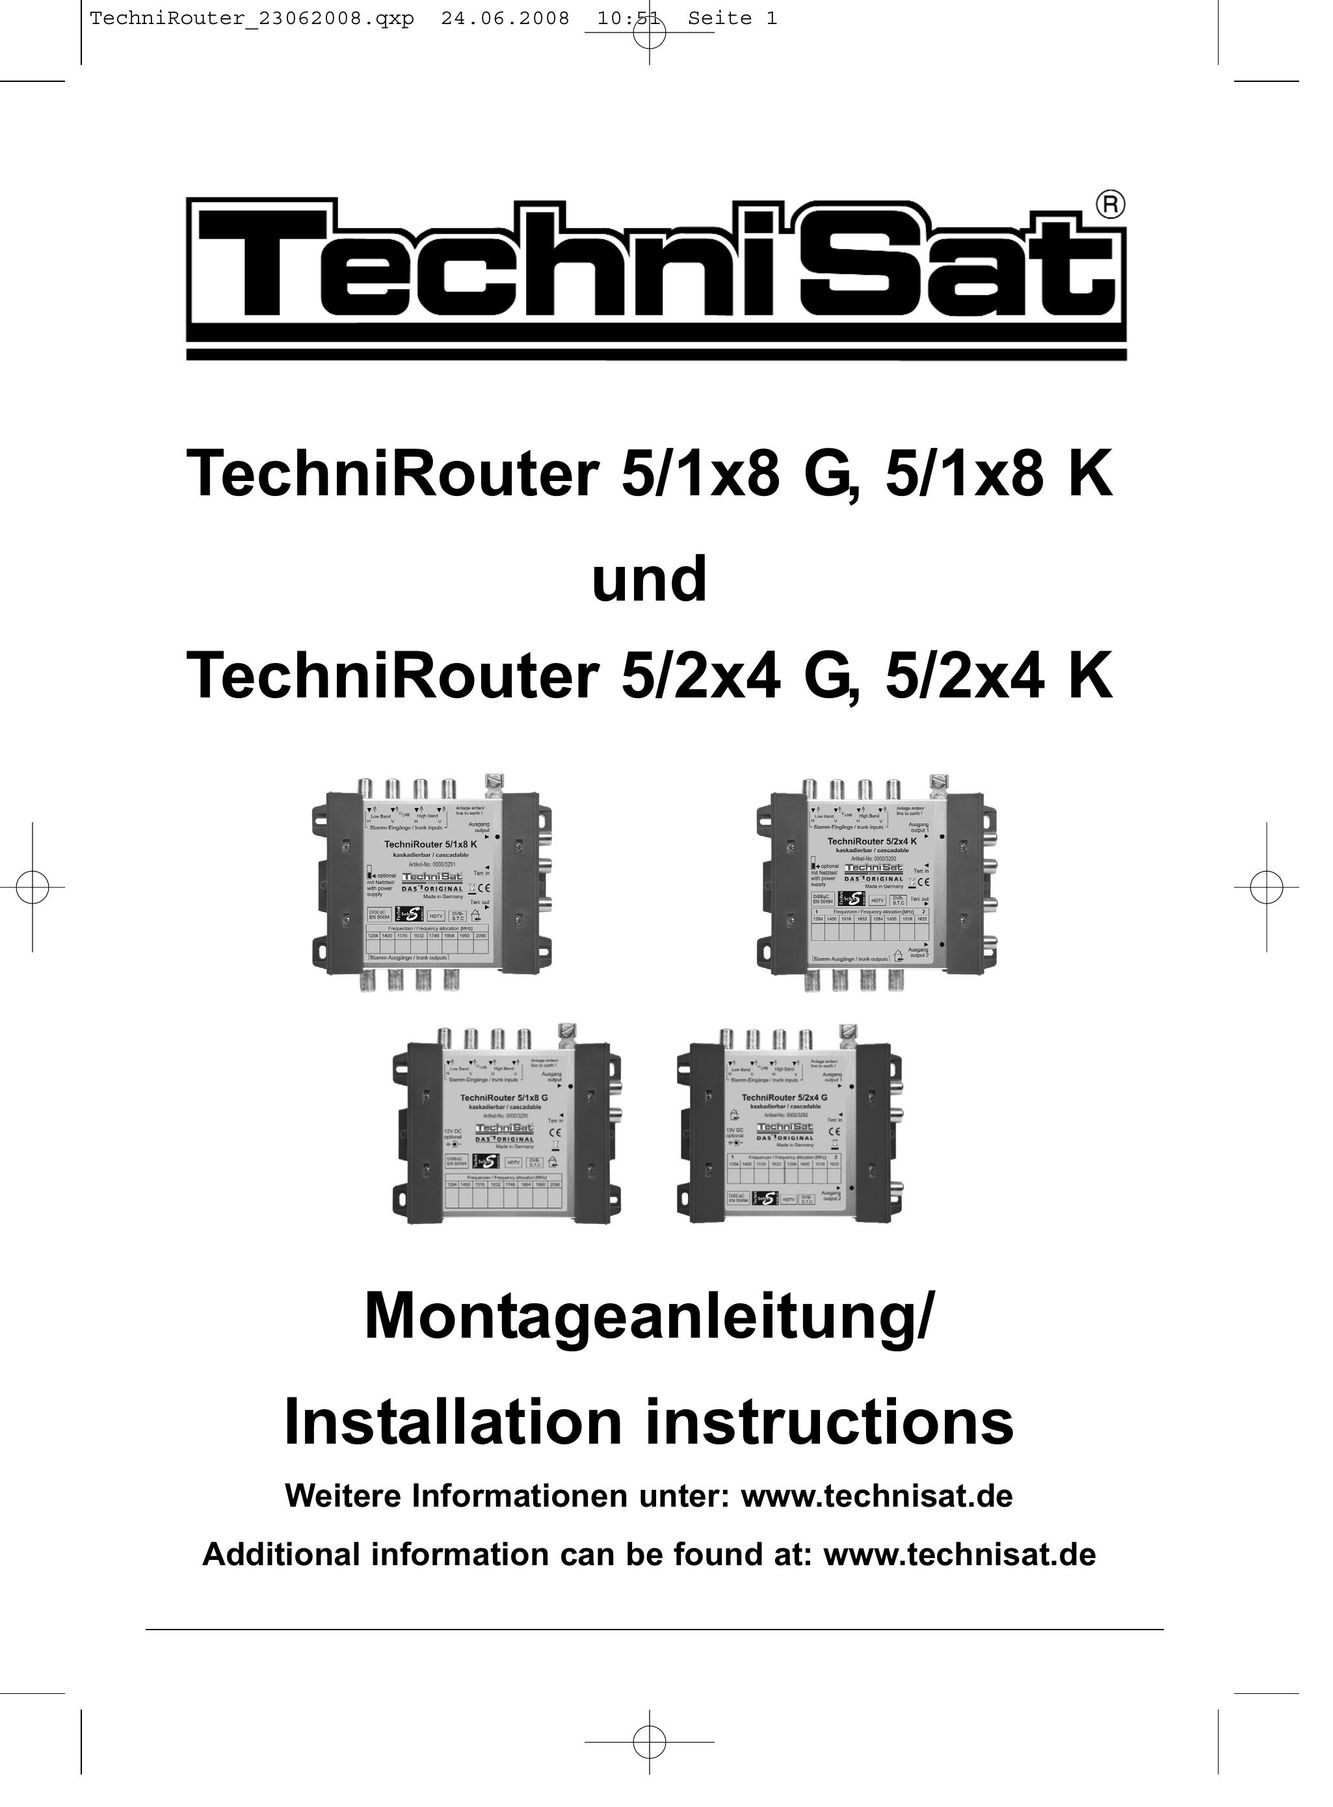 TechniSat 5/2x4 G Network Router User Manual